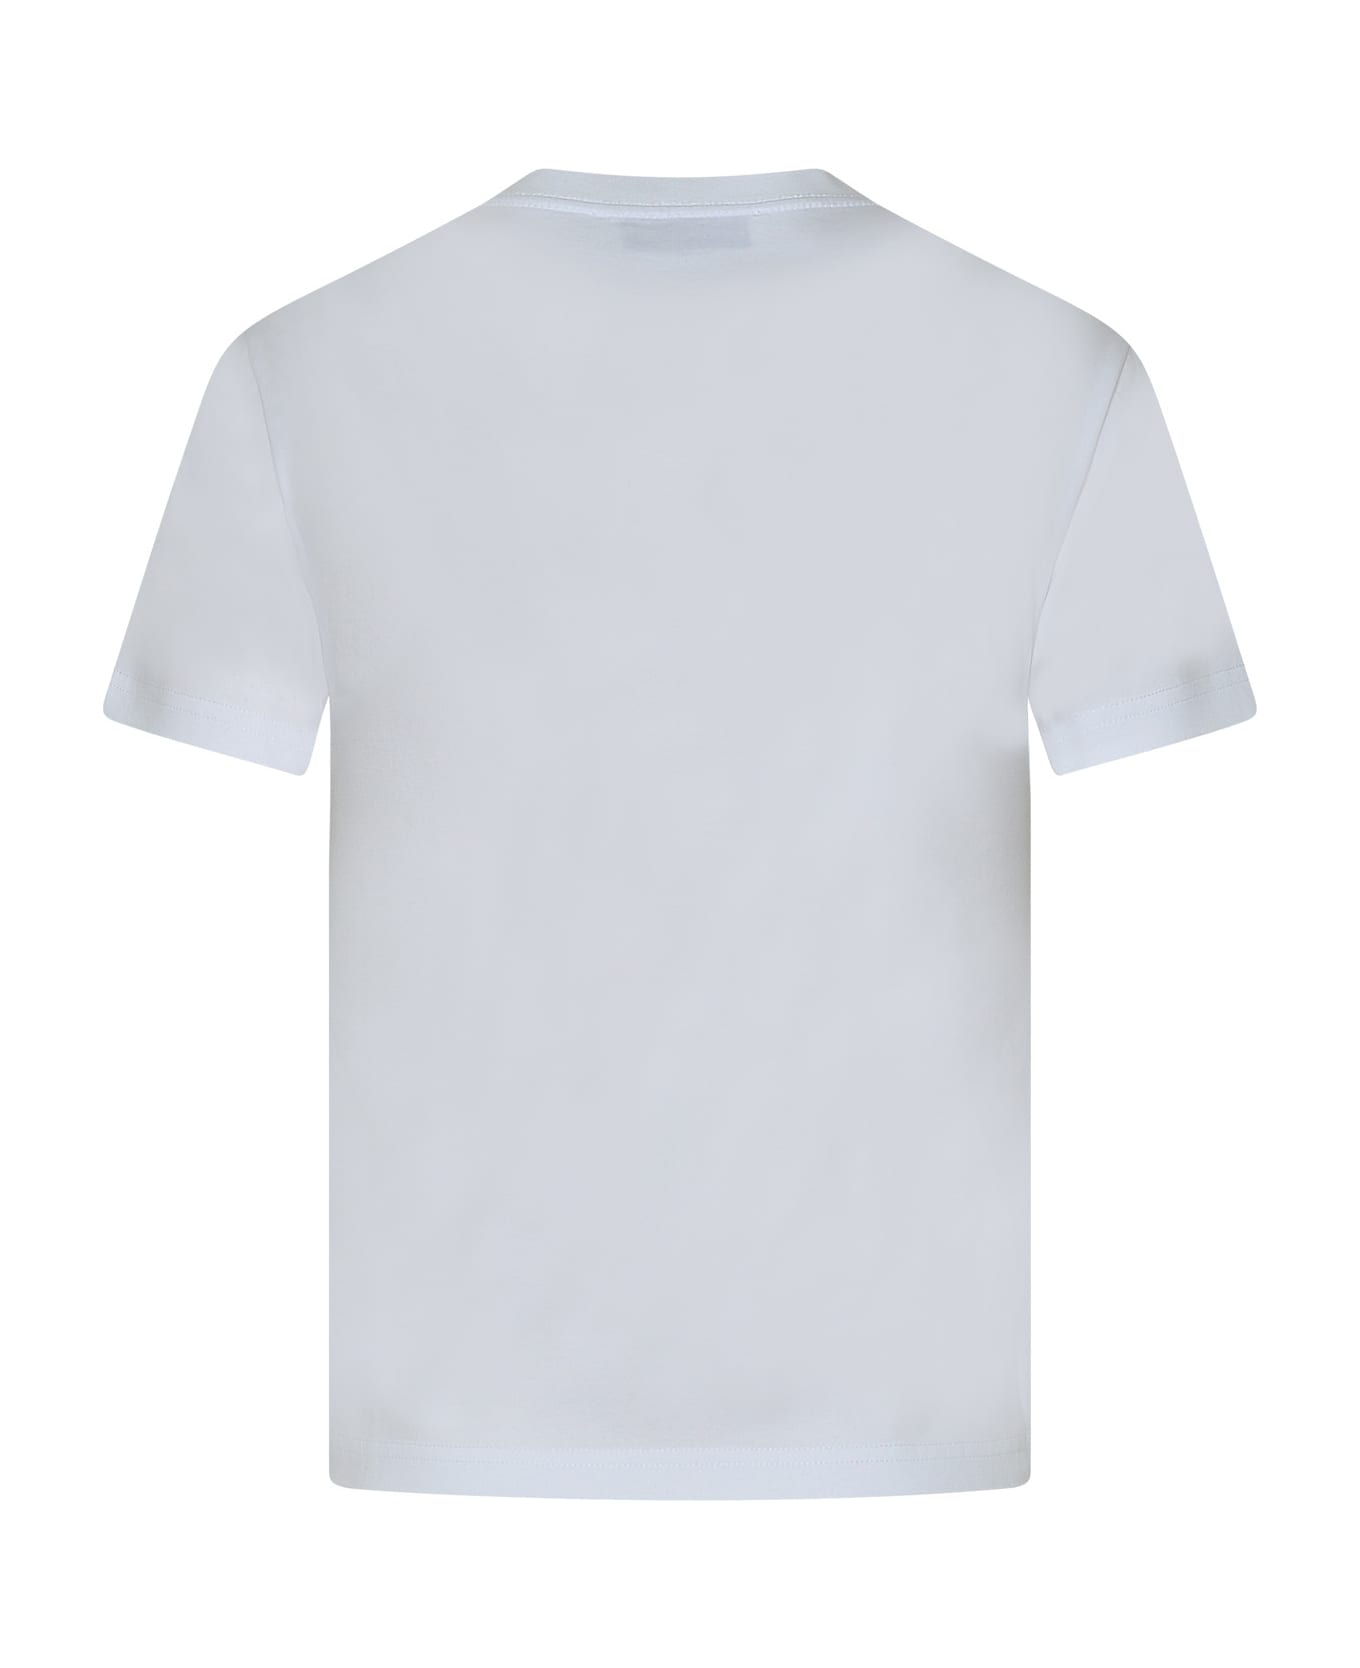 Lanvin Curb White Cotton T-shirt - White Tシャツ